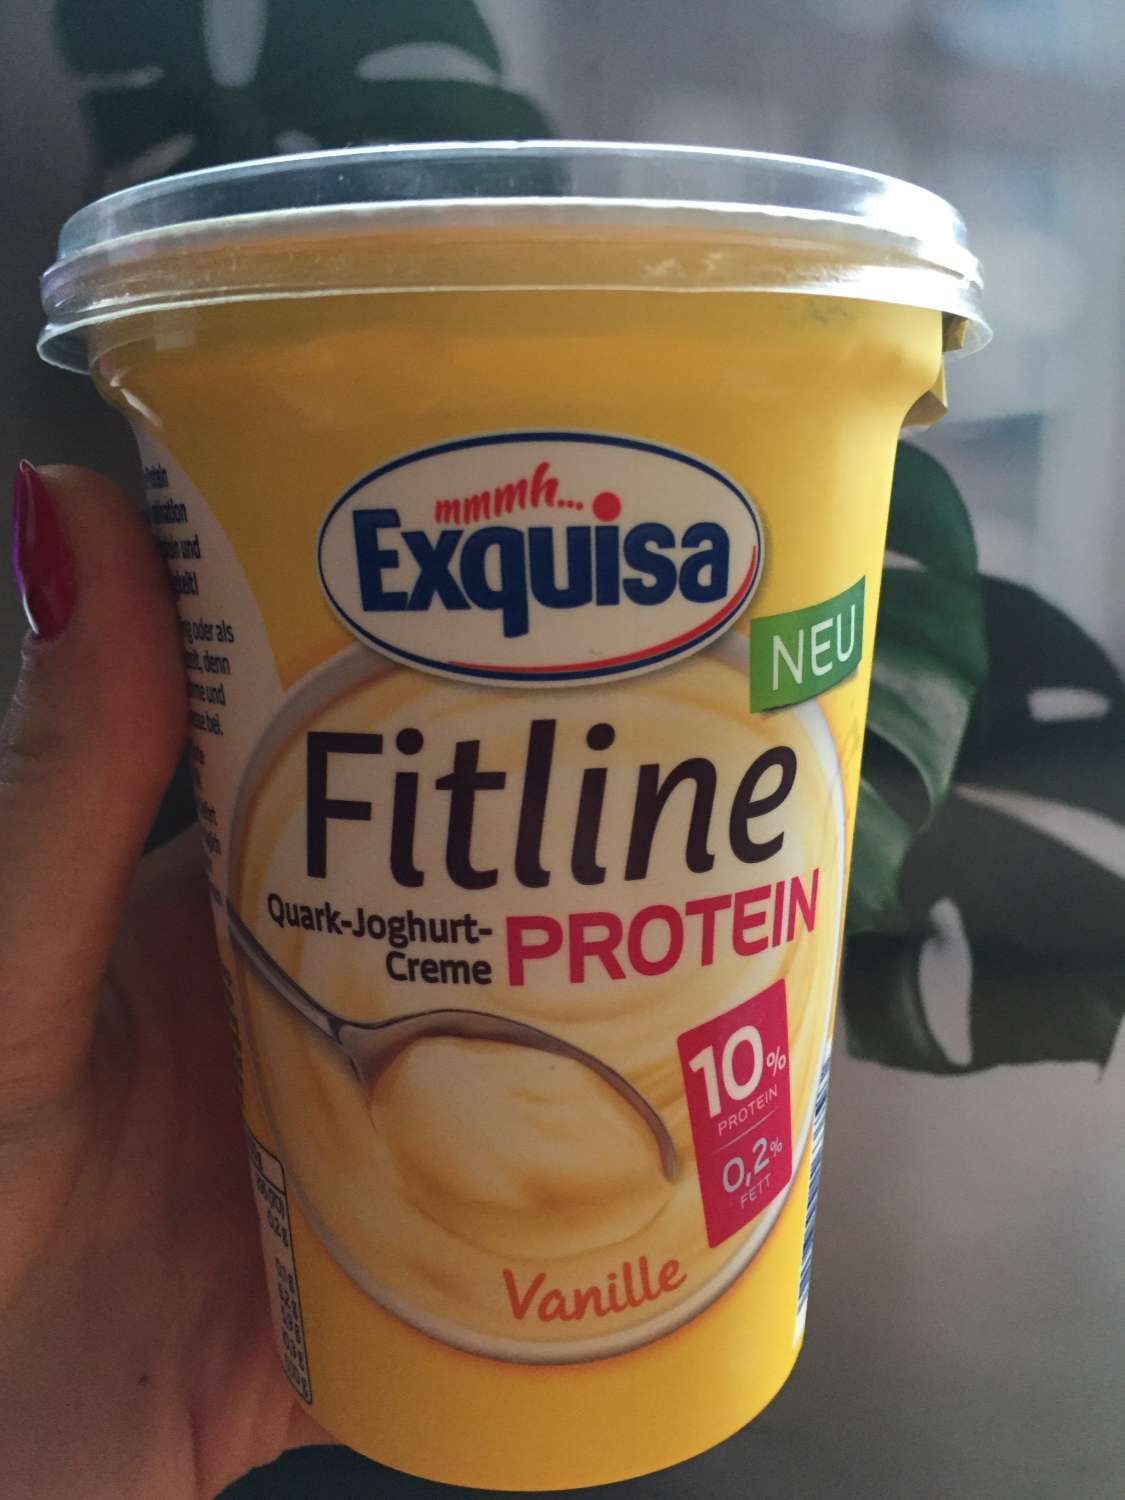 Йогурт Exquisa Quark-Joghurt-Creme Fitline Protein | отзывы